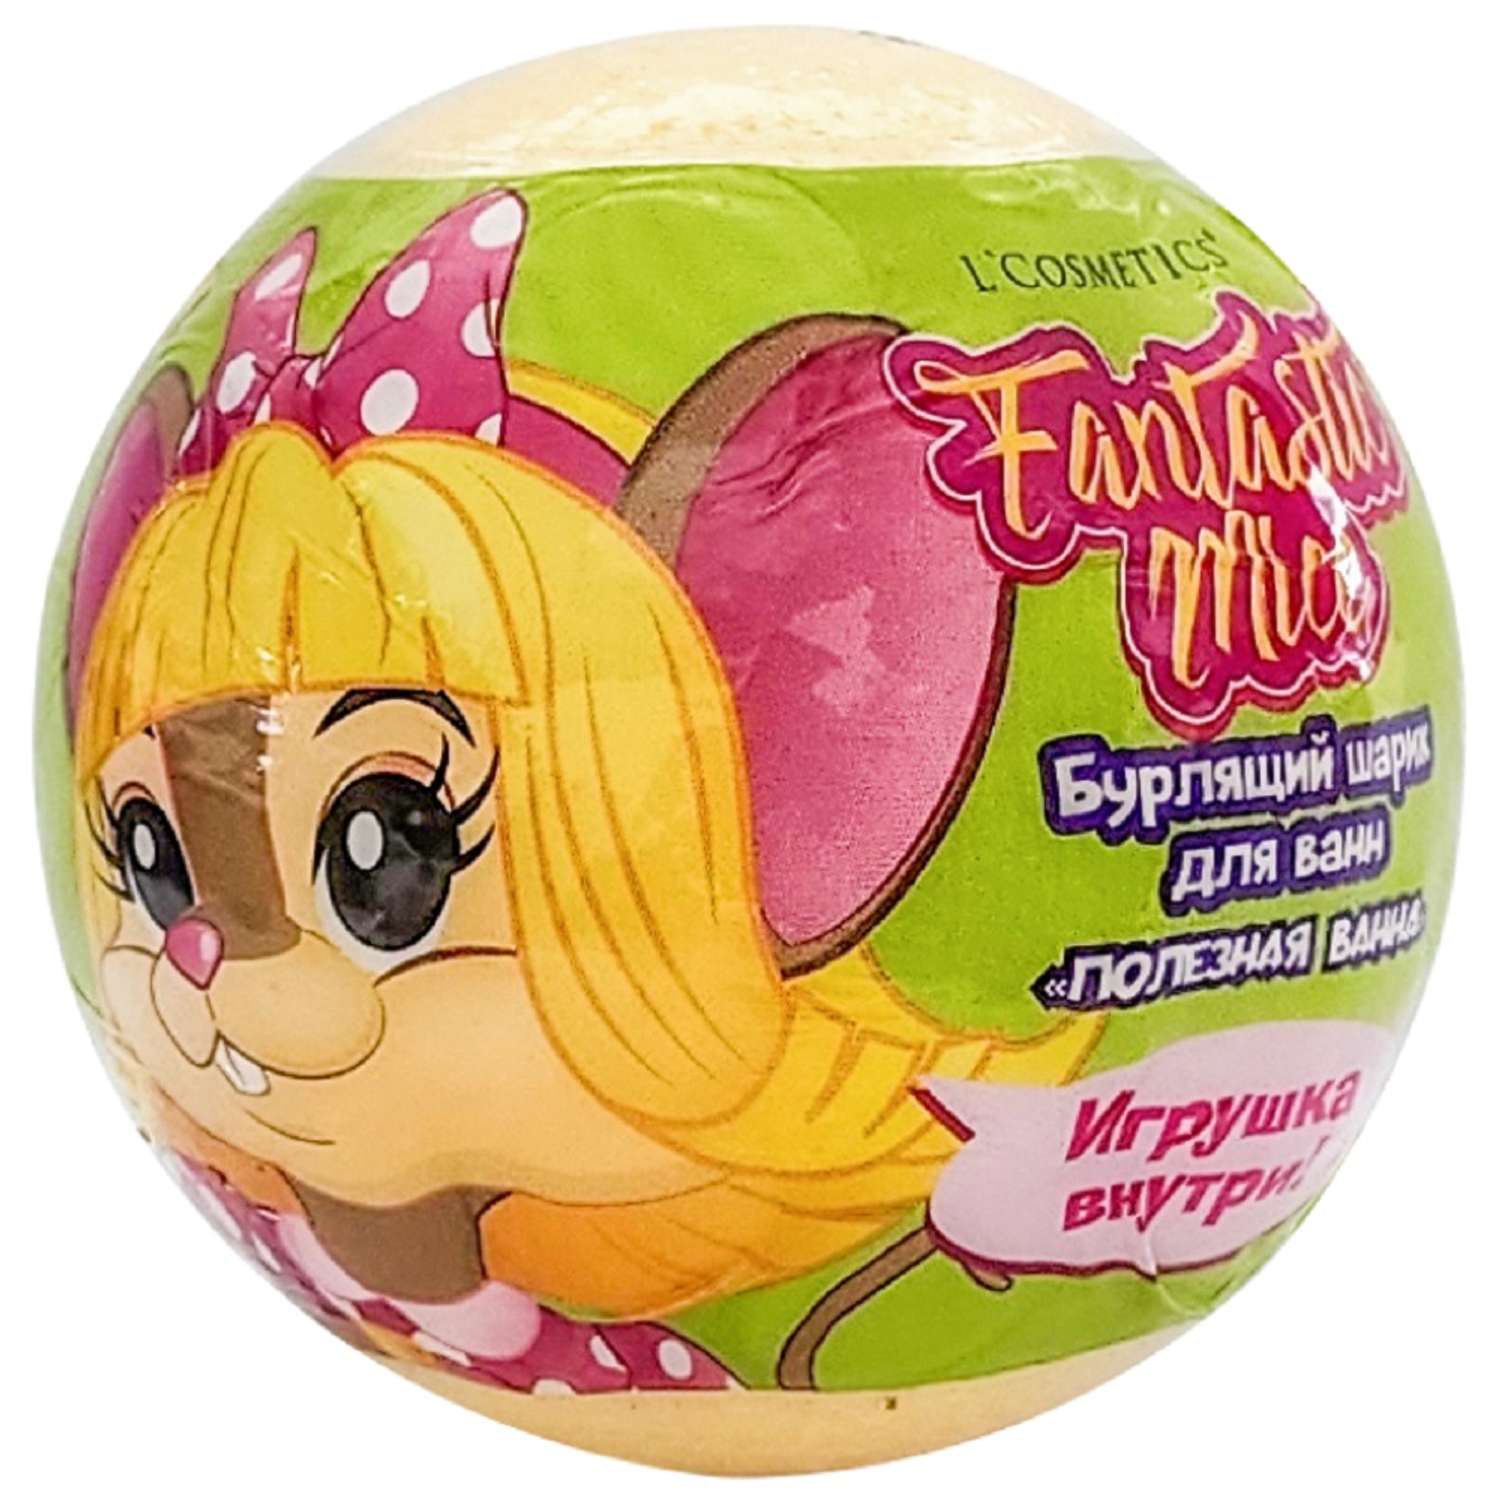 Бурлящий шар для ванны LCosmetics Fantastic Mice с игрушкой внутри 130г - фото 1